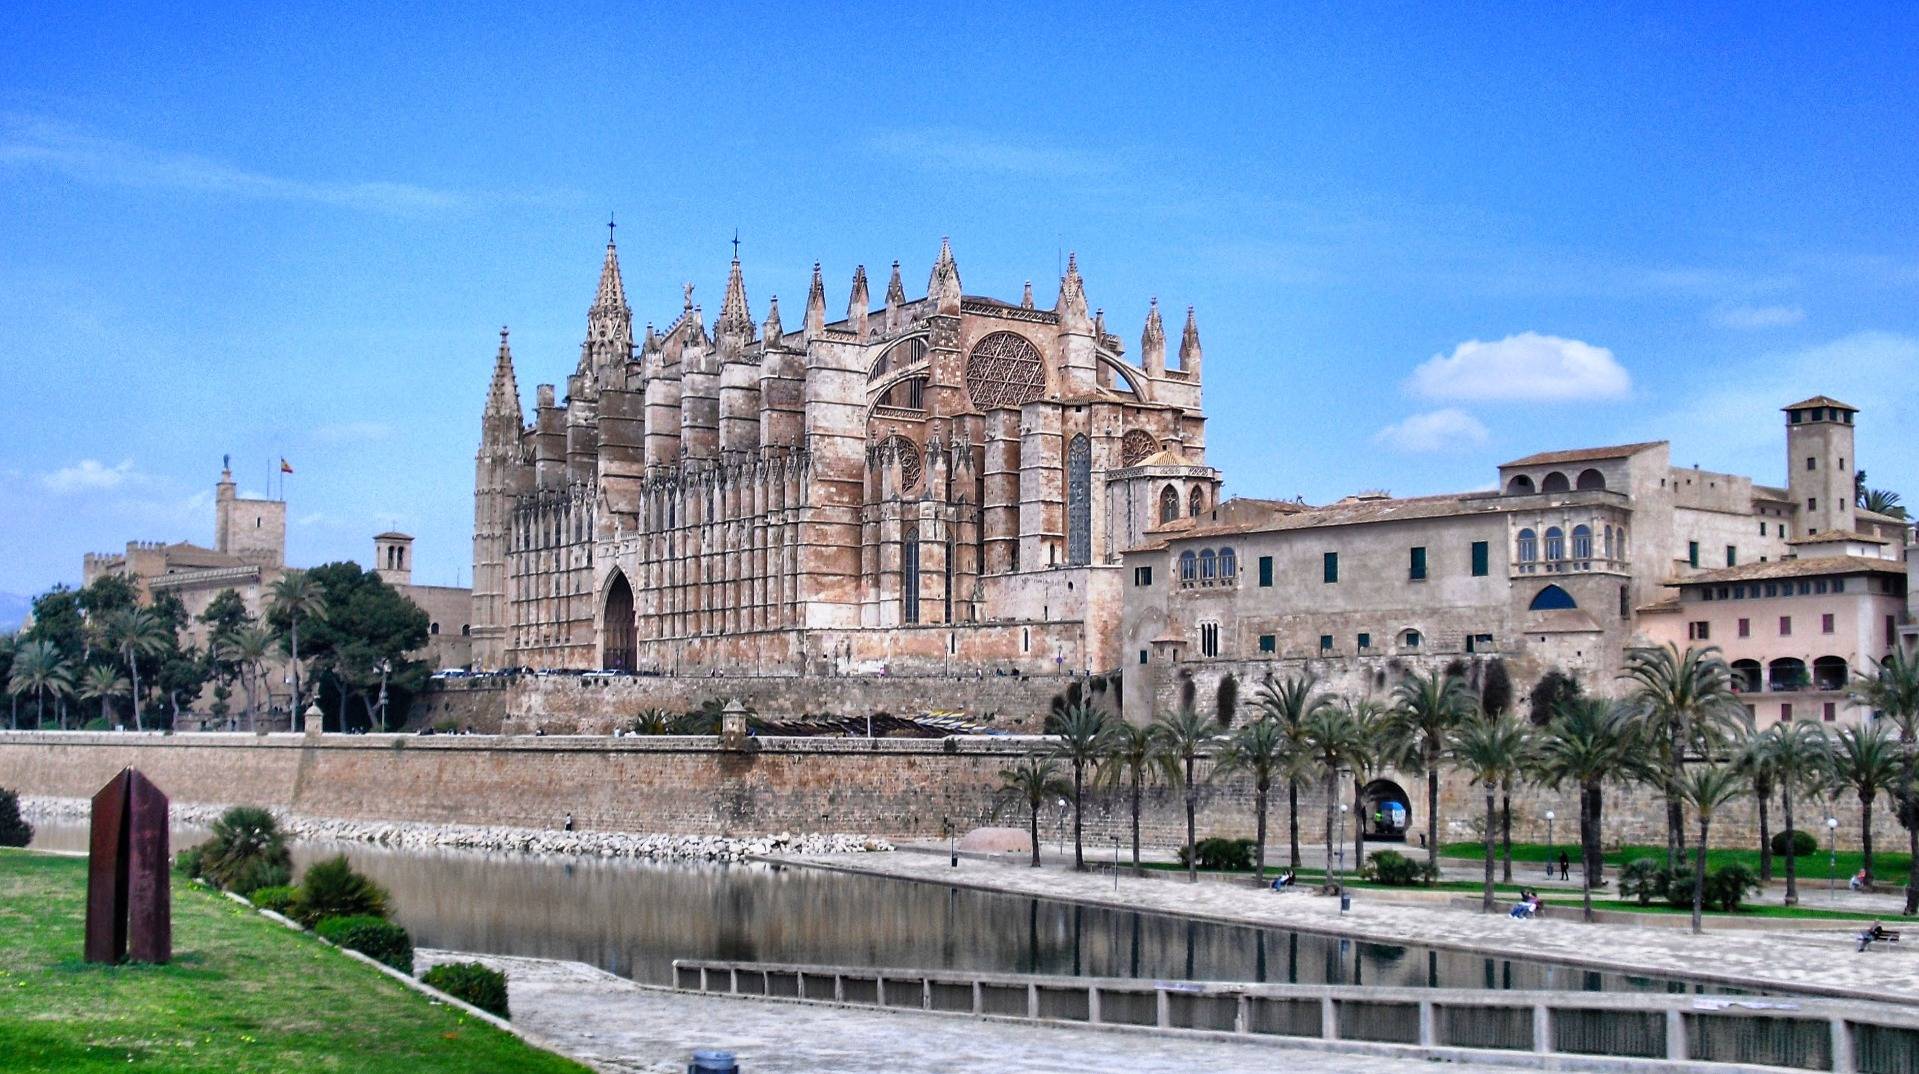 The magnificent cathedral of Palma de Mallorca